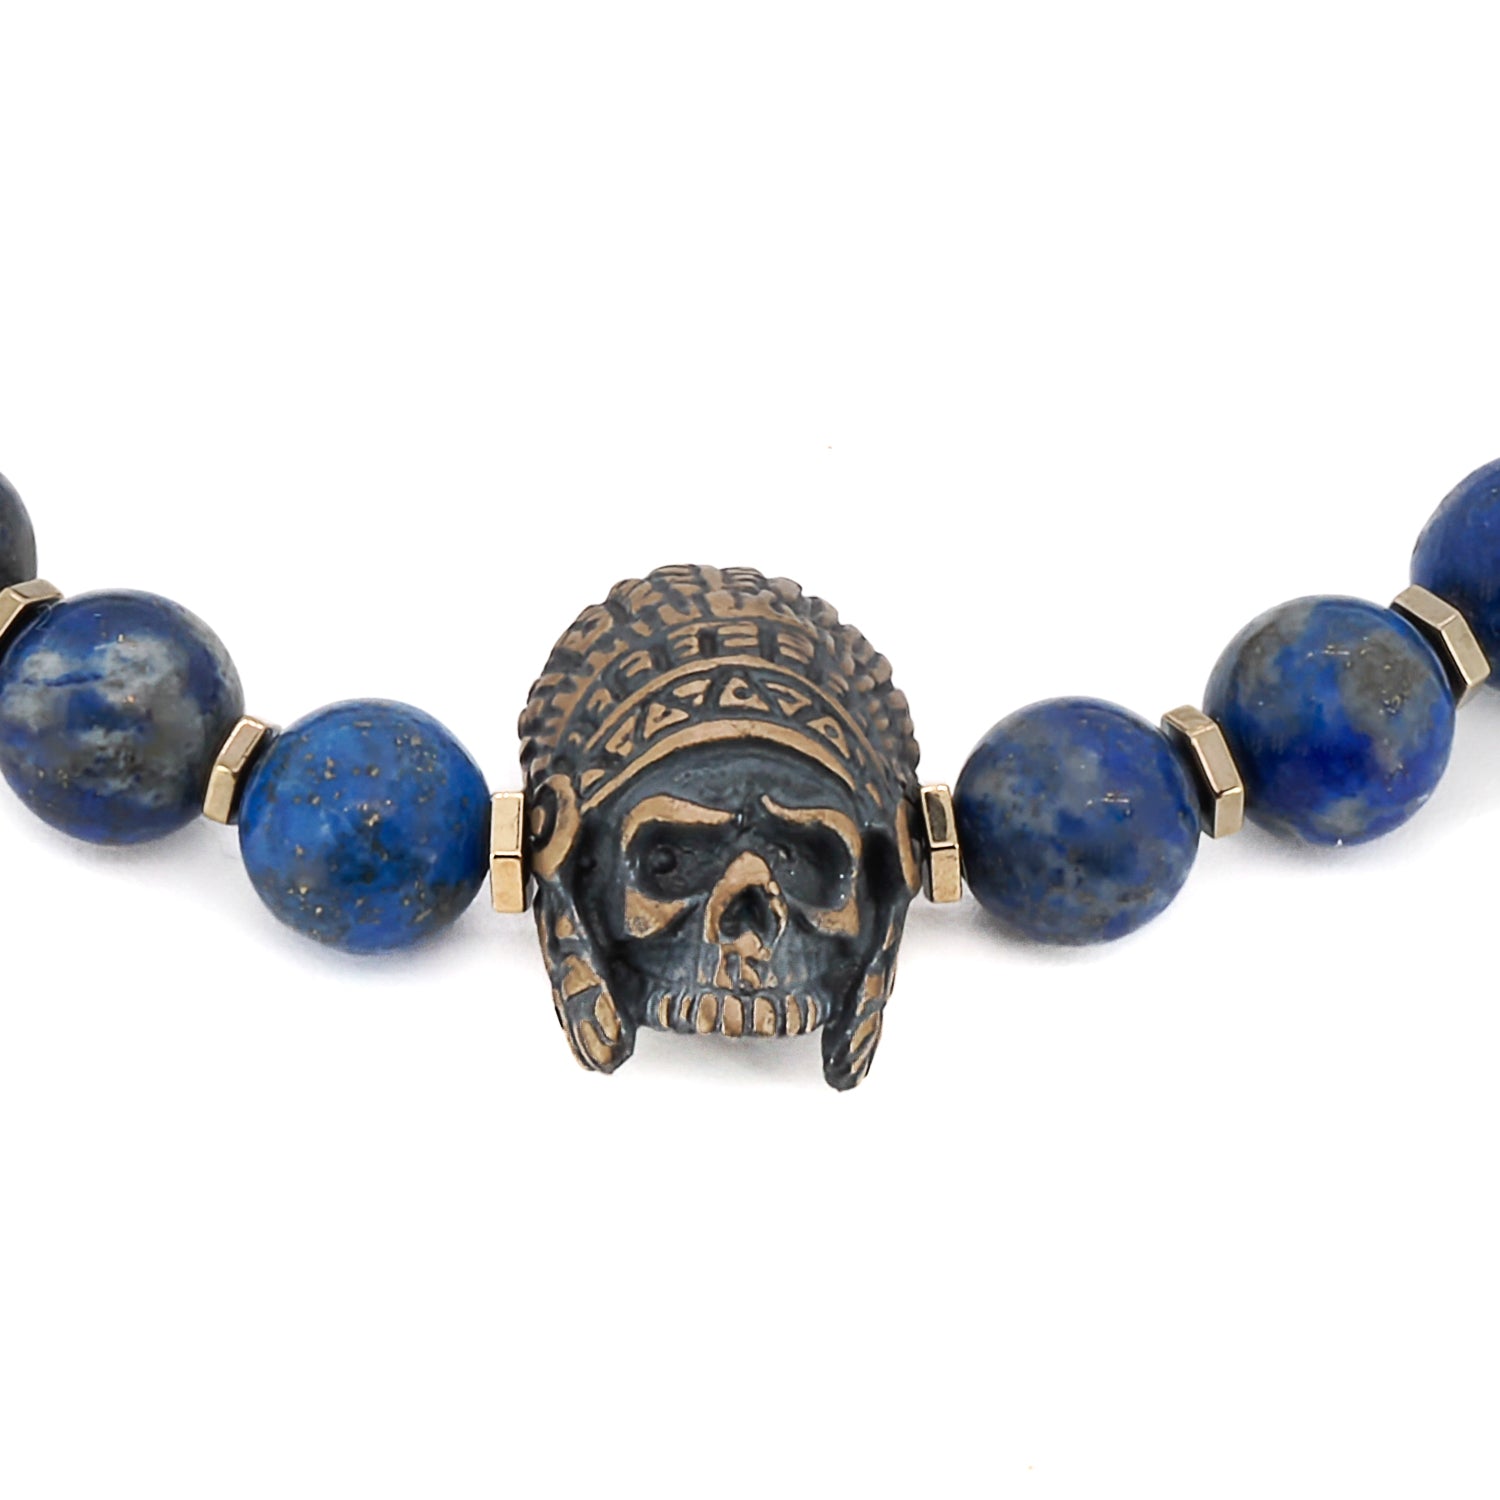 Deep Blue Gemstone - Lapis Lazuli Beads.